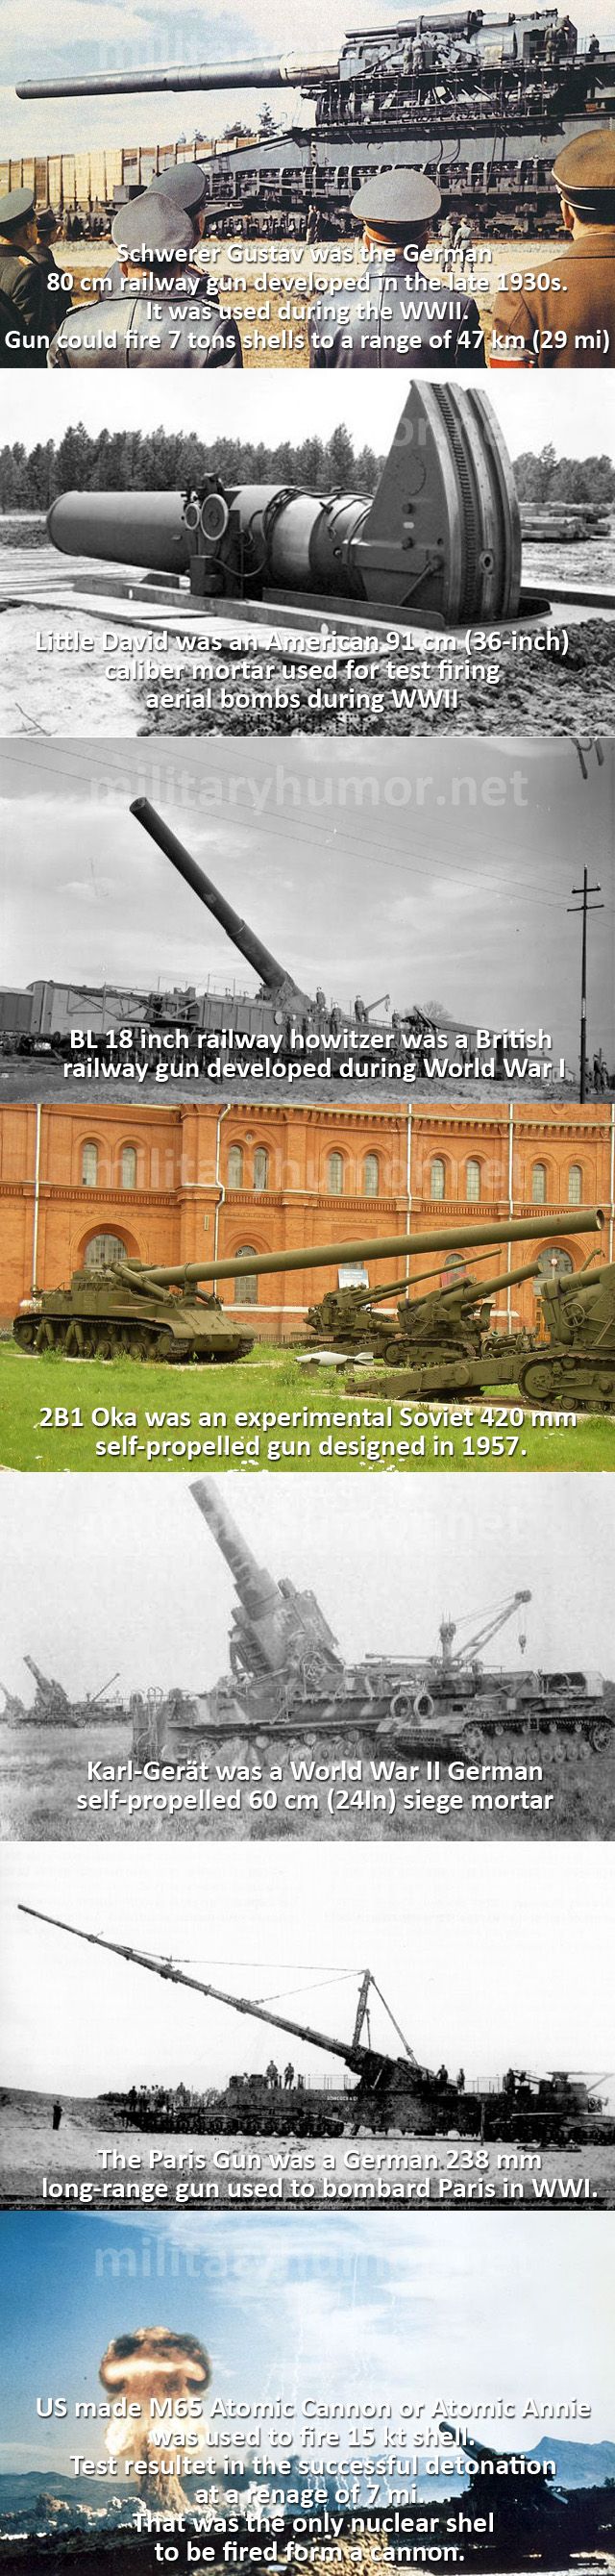 Biggest Guns From 20th Century